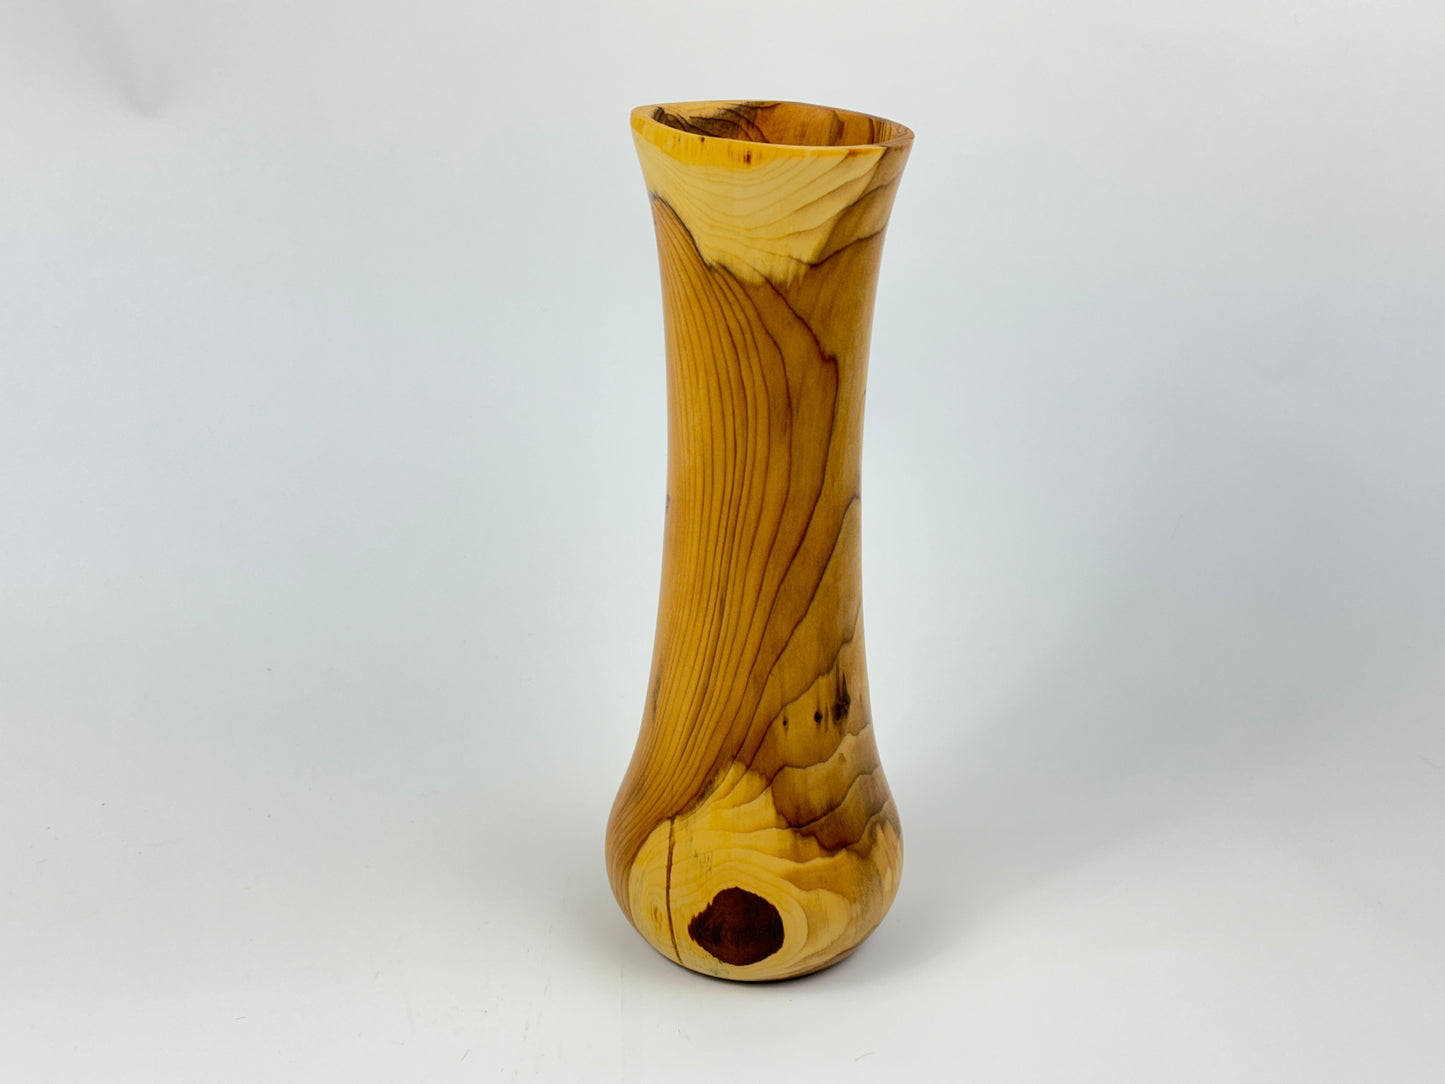 Penzance Yew no 3 Vase